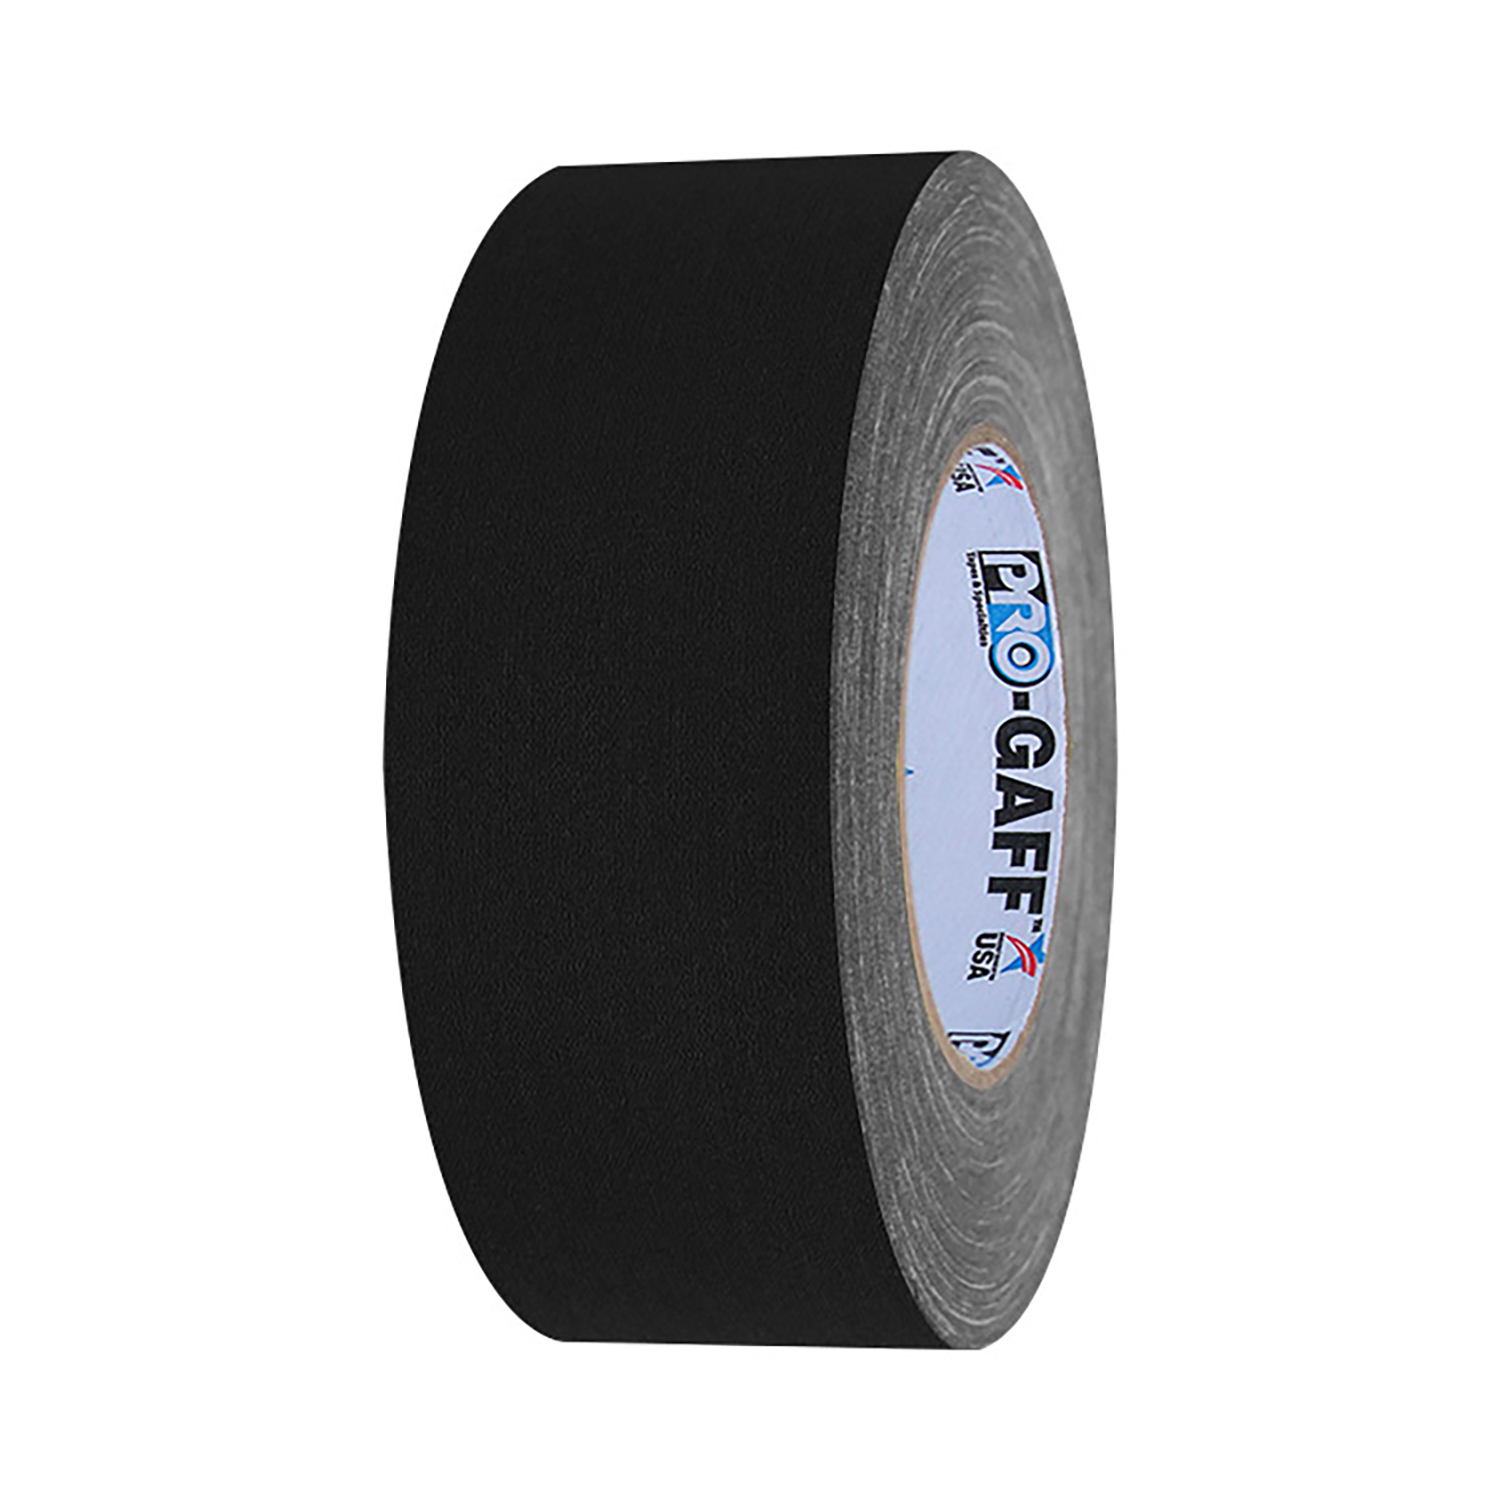 Pro Gaff Tape Cloth - Black - 55 Yards - 1"